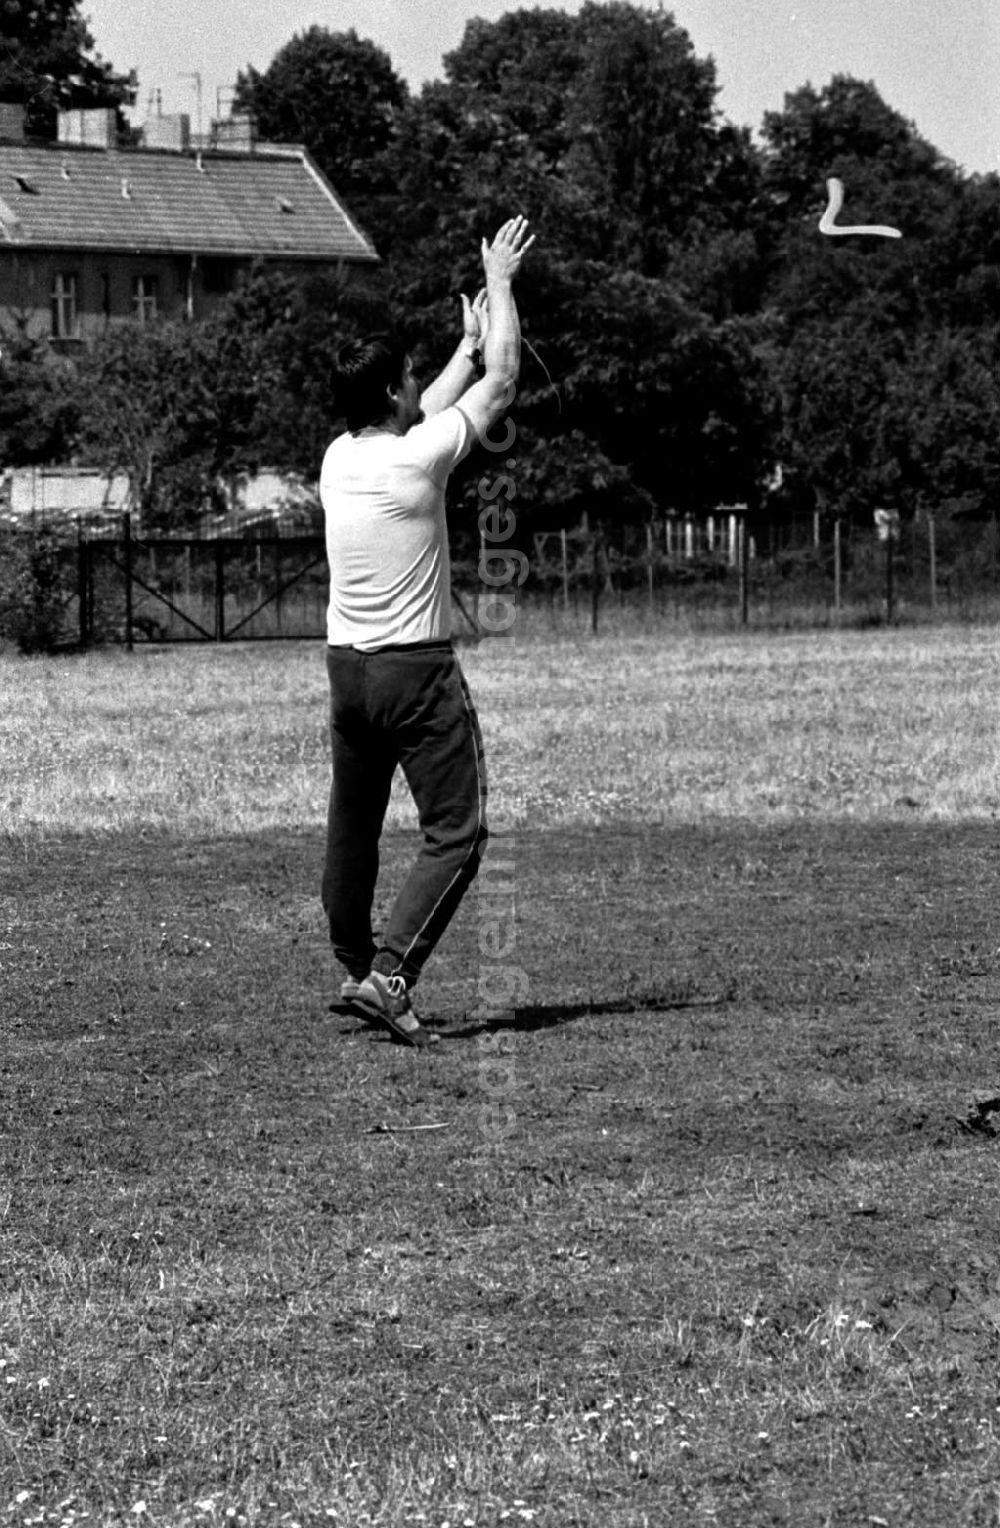 GDR image archive: Berlin-Pankow - Bumerang-Freizeitsportler in Pankow, Charlottenstr. 23.